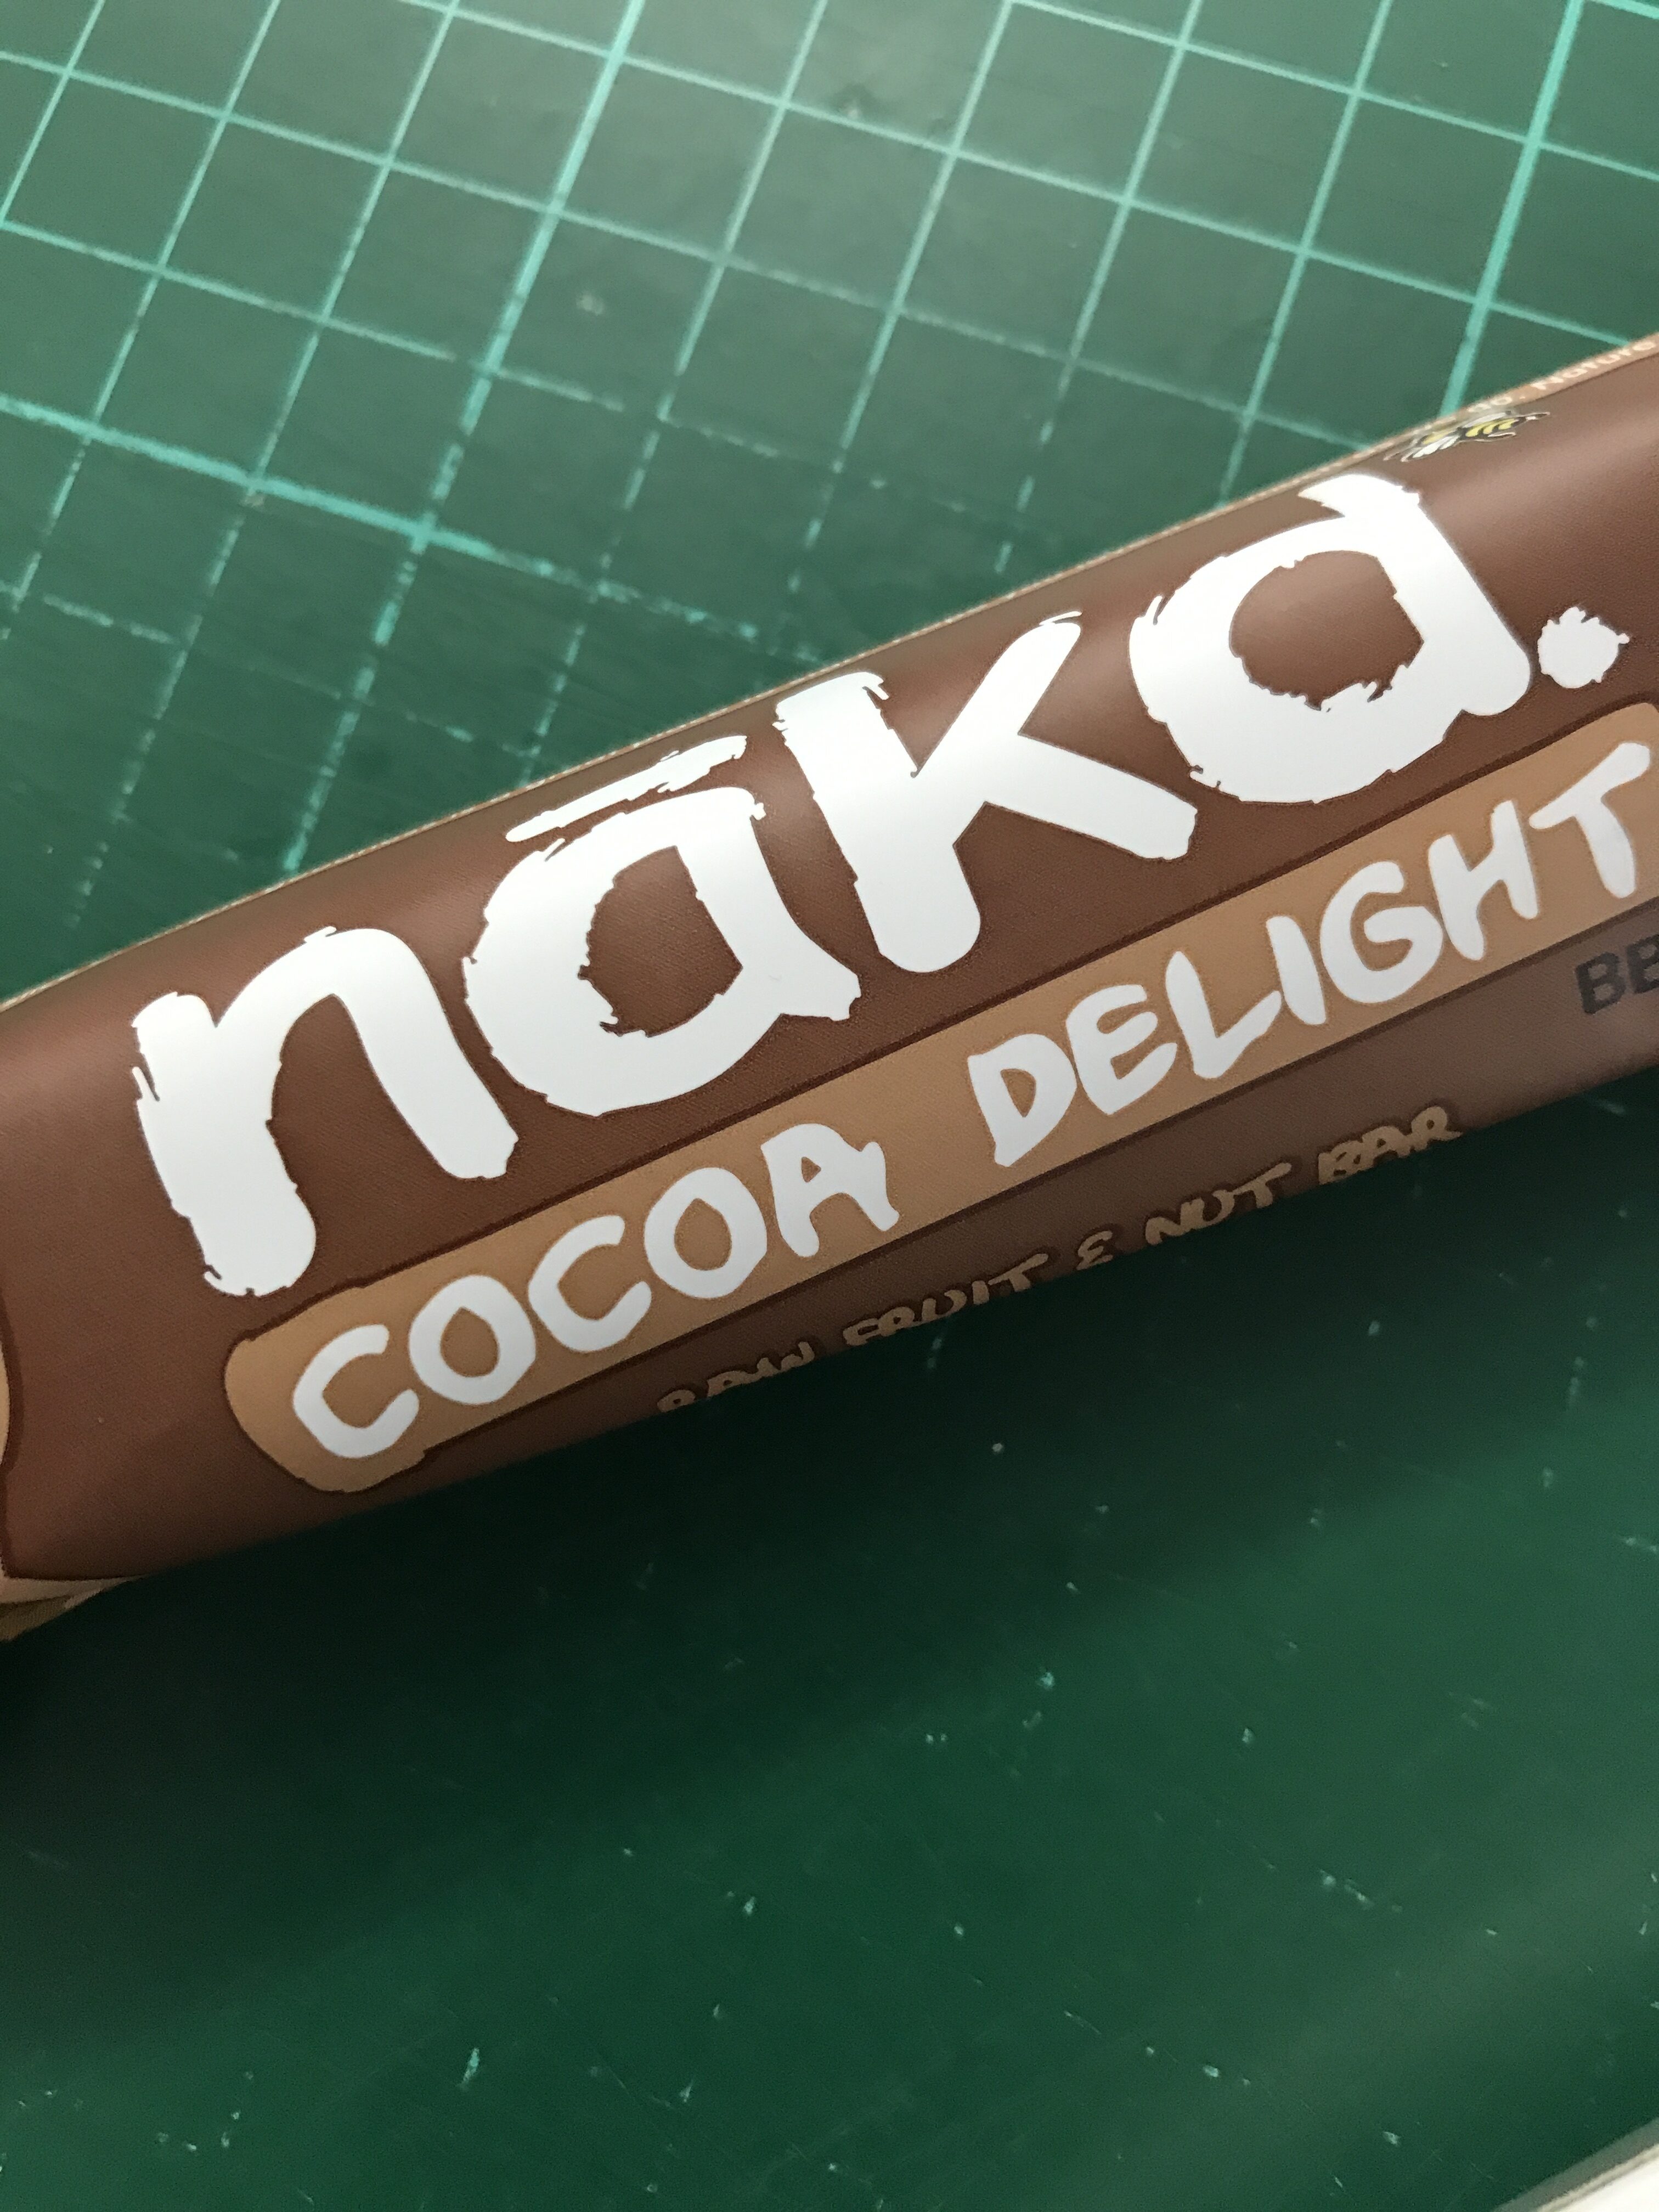 Nakd Cacao - Product - fr